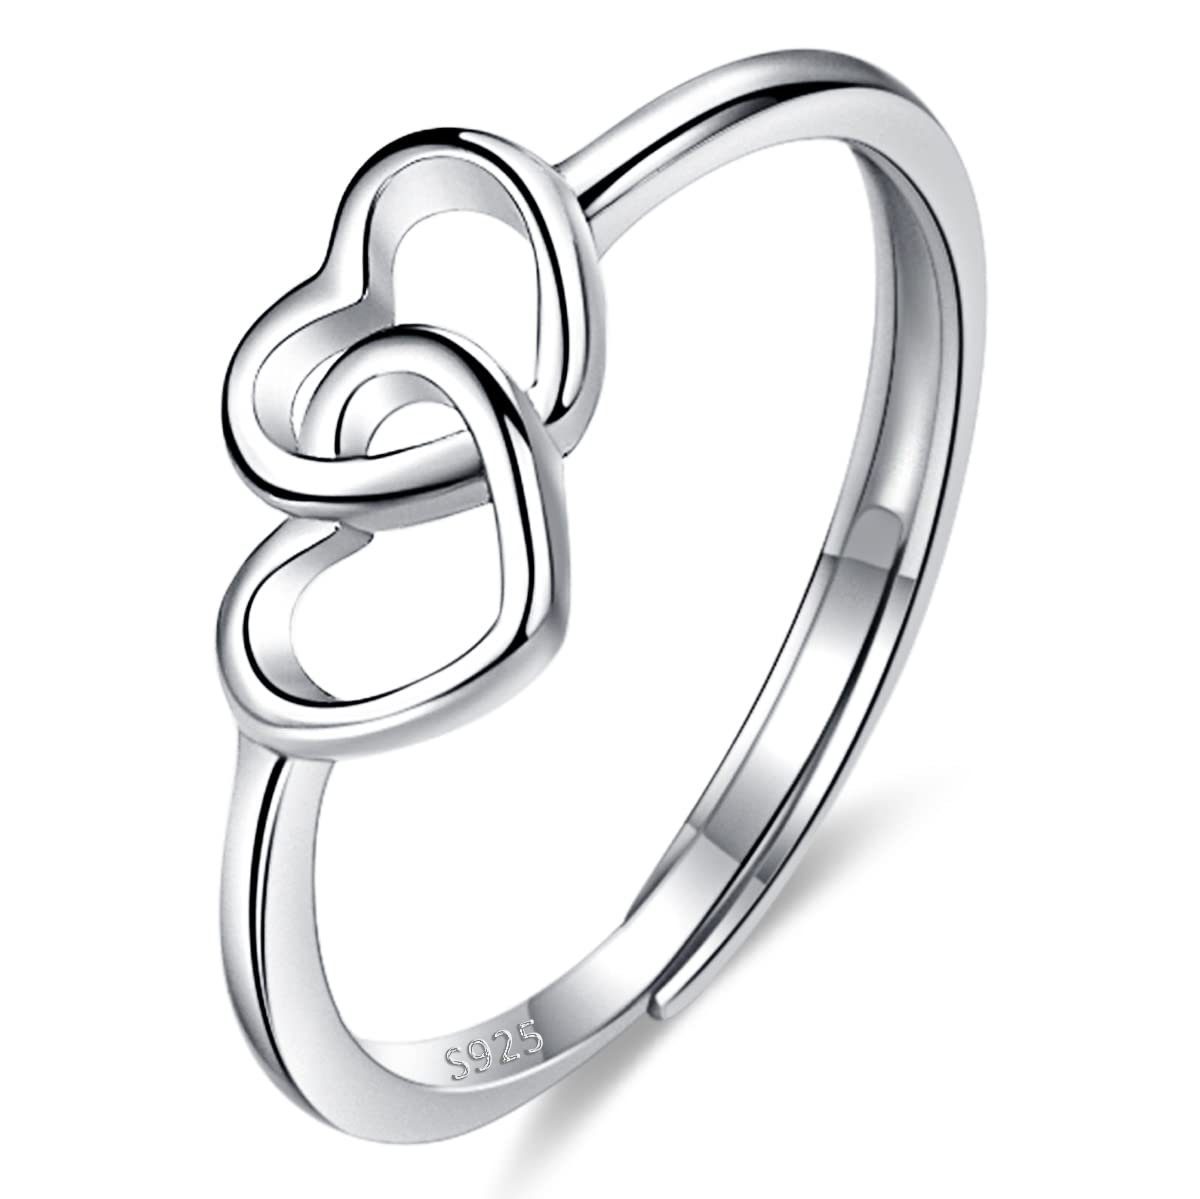 POCHUMIDUU Fingerring S925 Sterling Silber Herzform Mode Trend Damen Ring, Silberschmuck für Frauen aus 925er Sterlingsilber